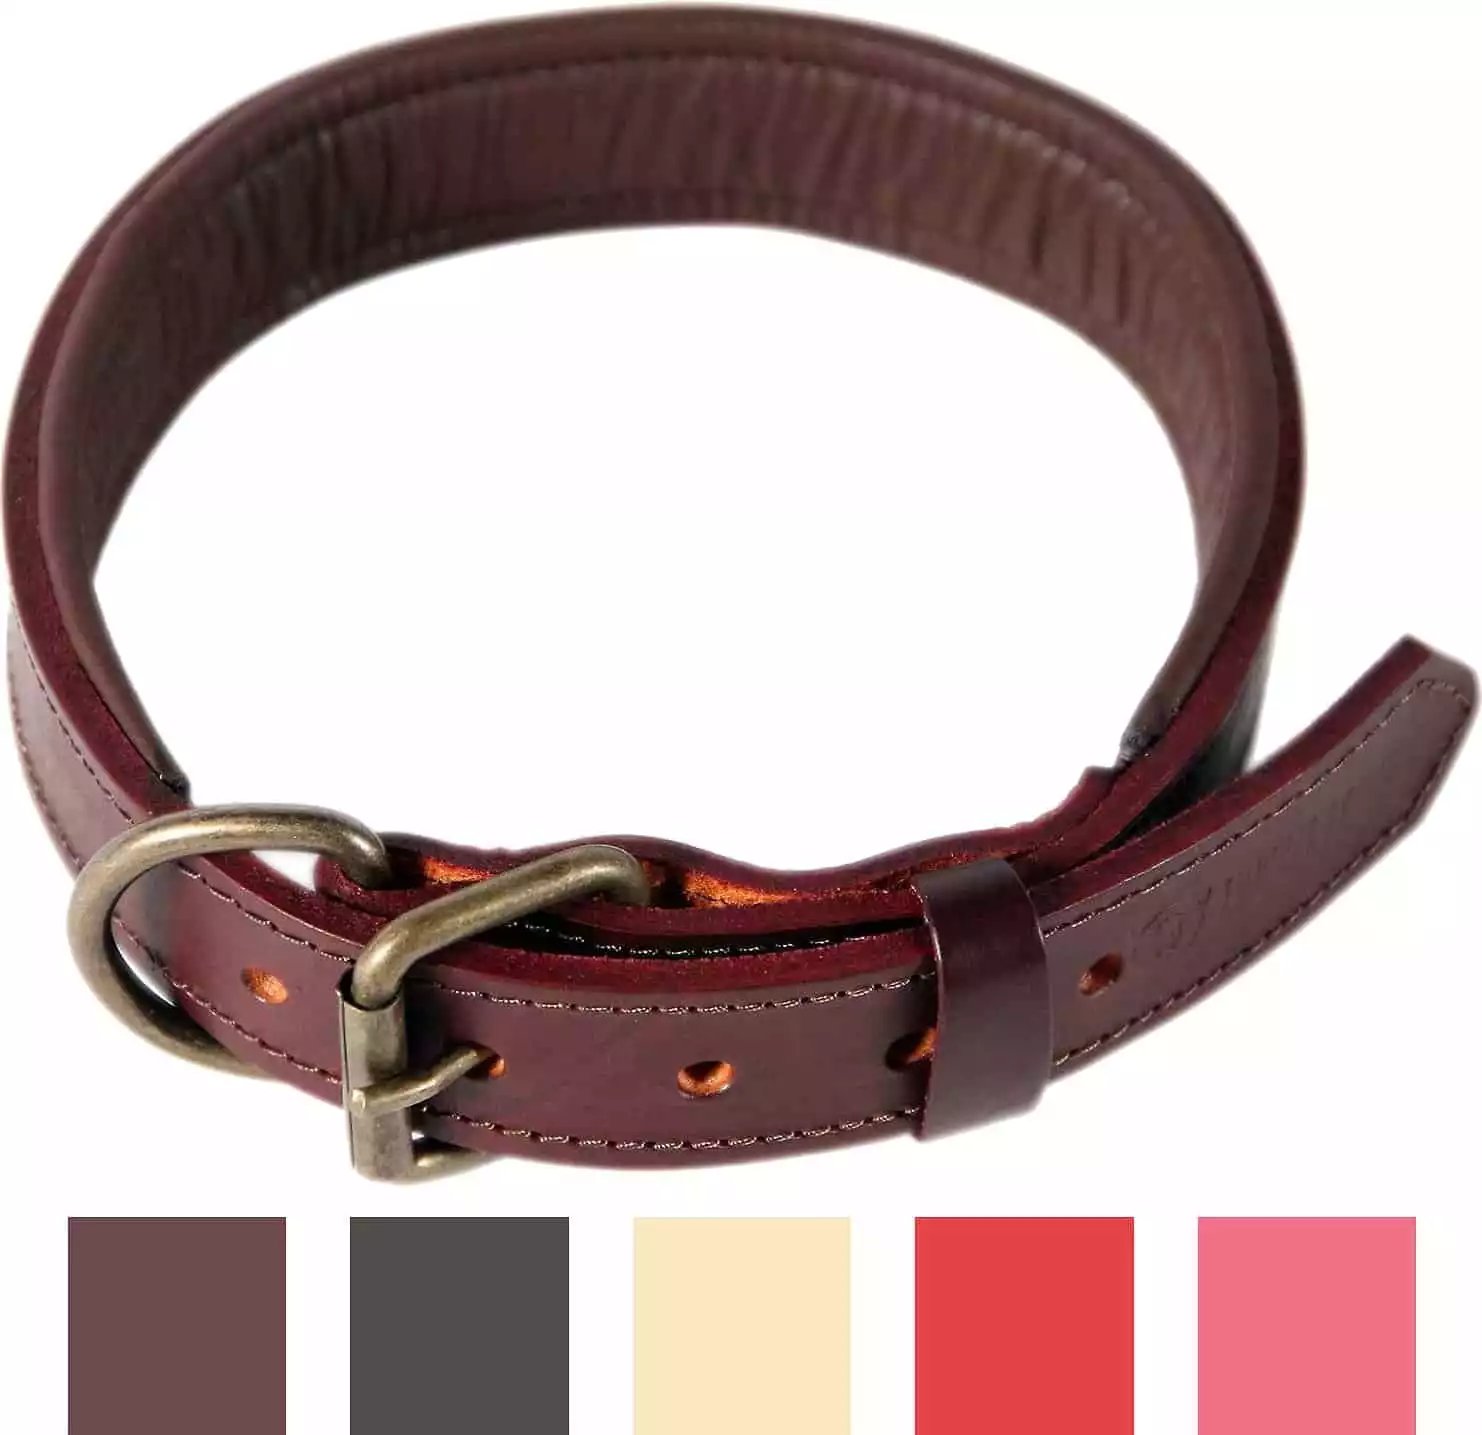 Logical Leather Padded Dog Collar